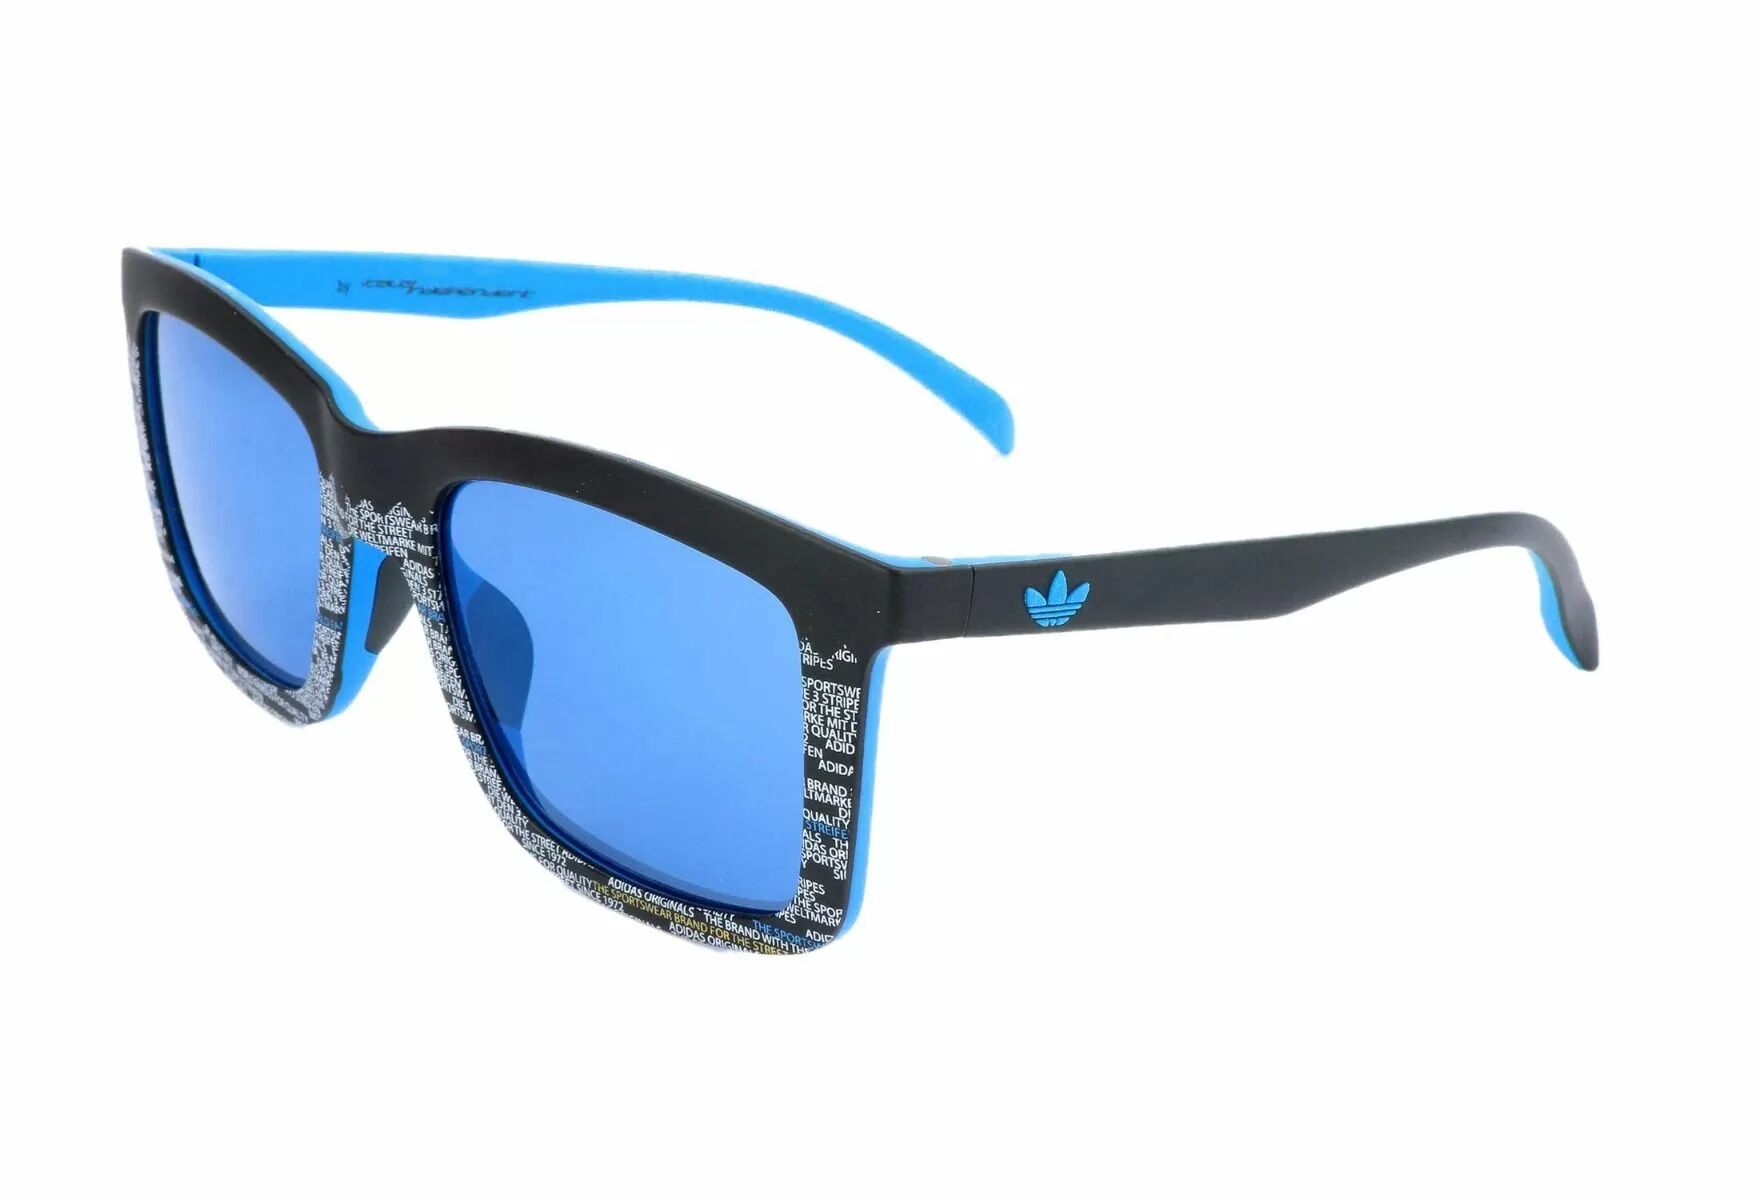 Adidas Aor015 Pnk.009 Aor015 - Svart - Blå, Blue Mirror, Unisex - Adidas Solbriller